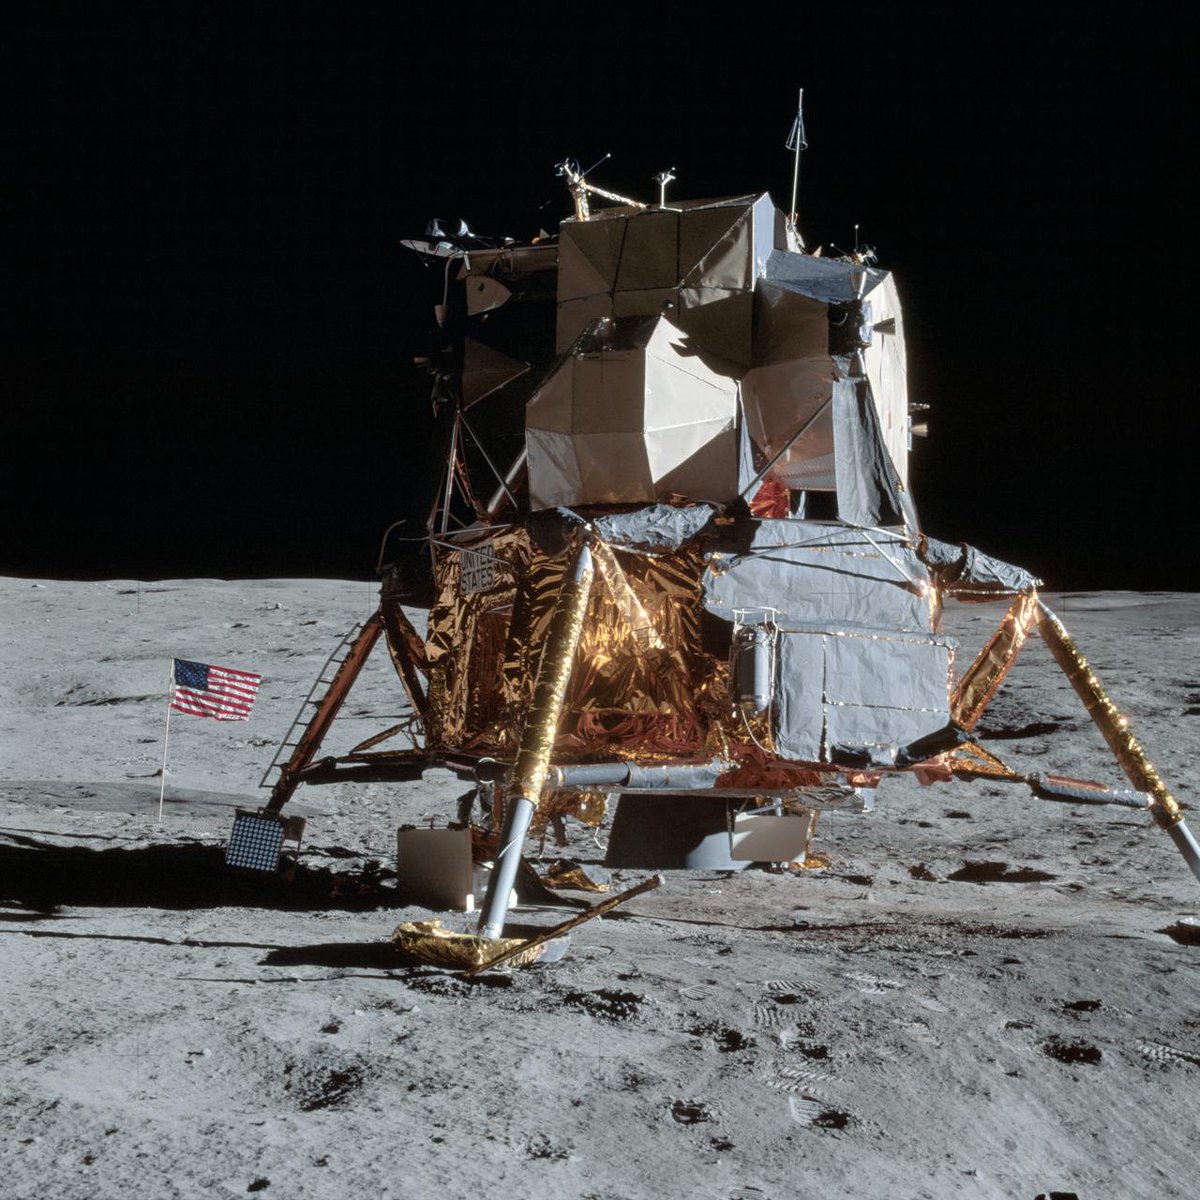 View of Apollo 14 Lunar Module on tha Moon. I aint talkin' bout chicken n' gravy biatch fo' realz. A US flag n' laser rangin retro reflector sit ta tha left of tha spacecraft on tha lunar surface.